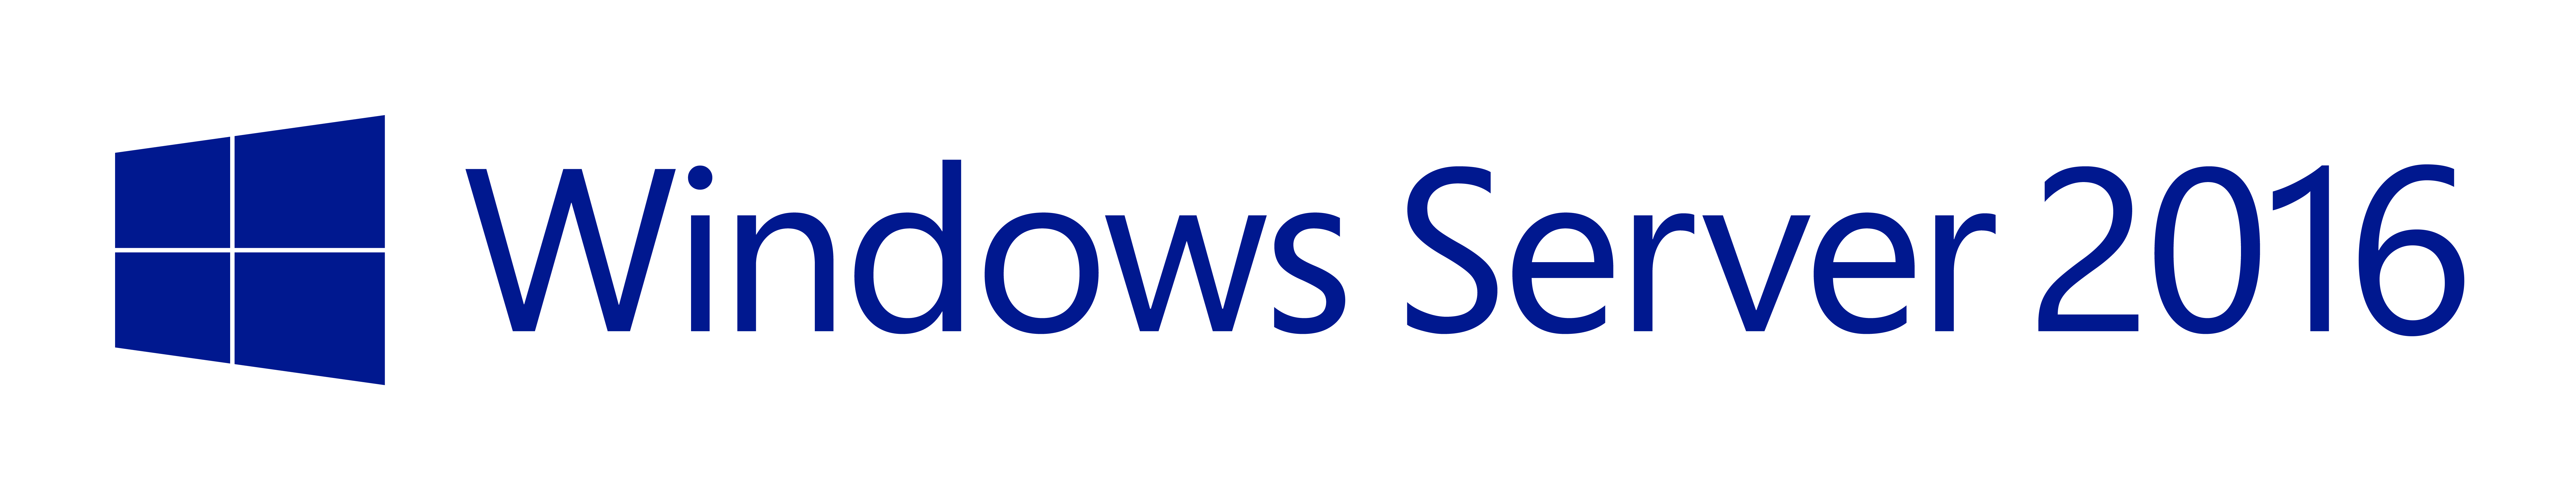 Microsoft Windows Server Logo - File:Windows-server-2016.png - Wikimedia Commons